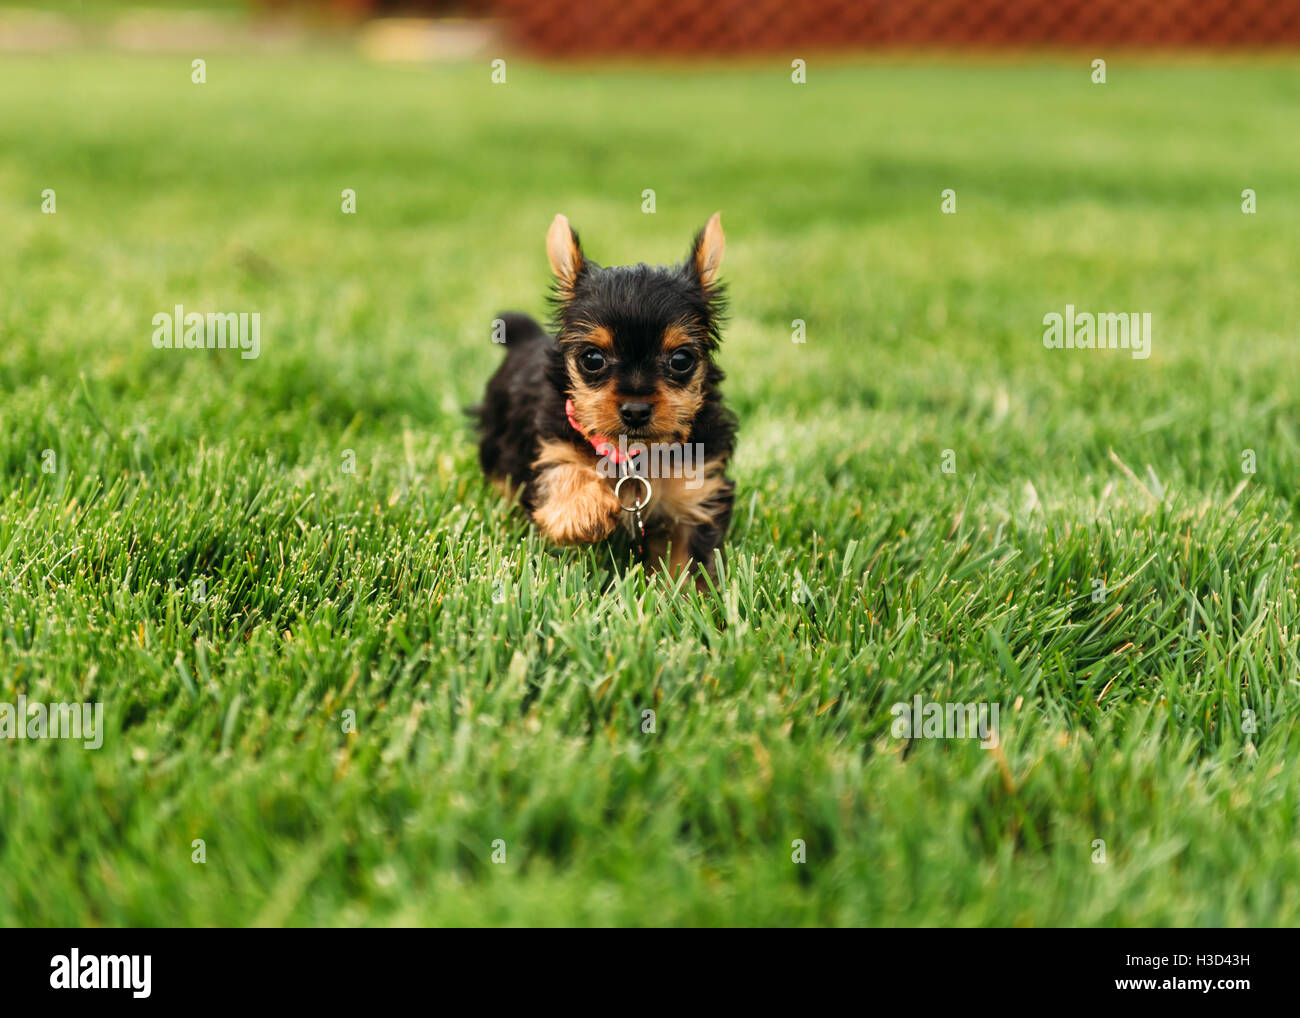 Portrait de Yorkshire Terrier puppy sitting on grassy field Banque D'Images